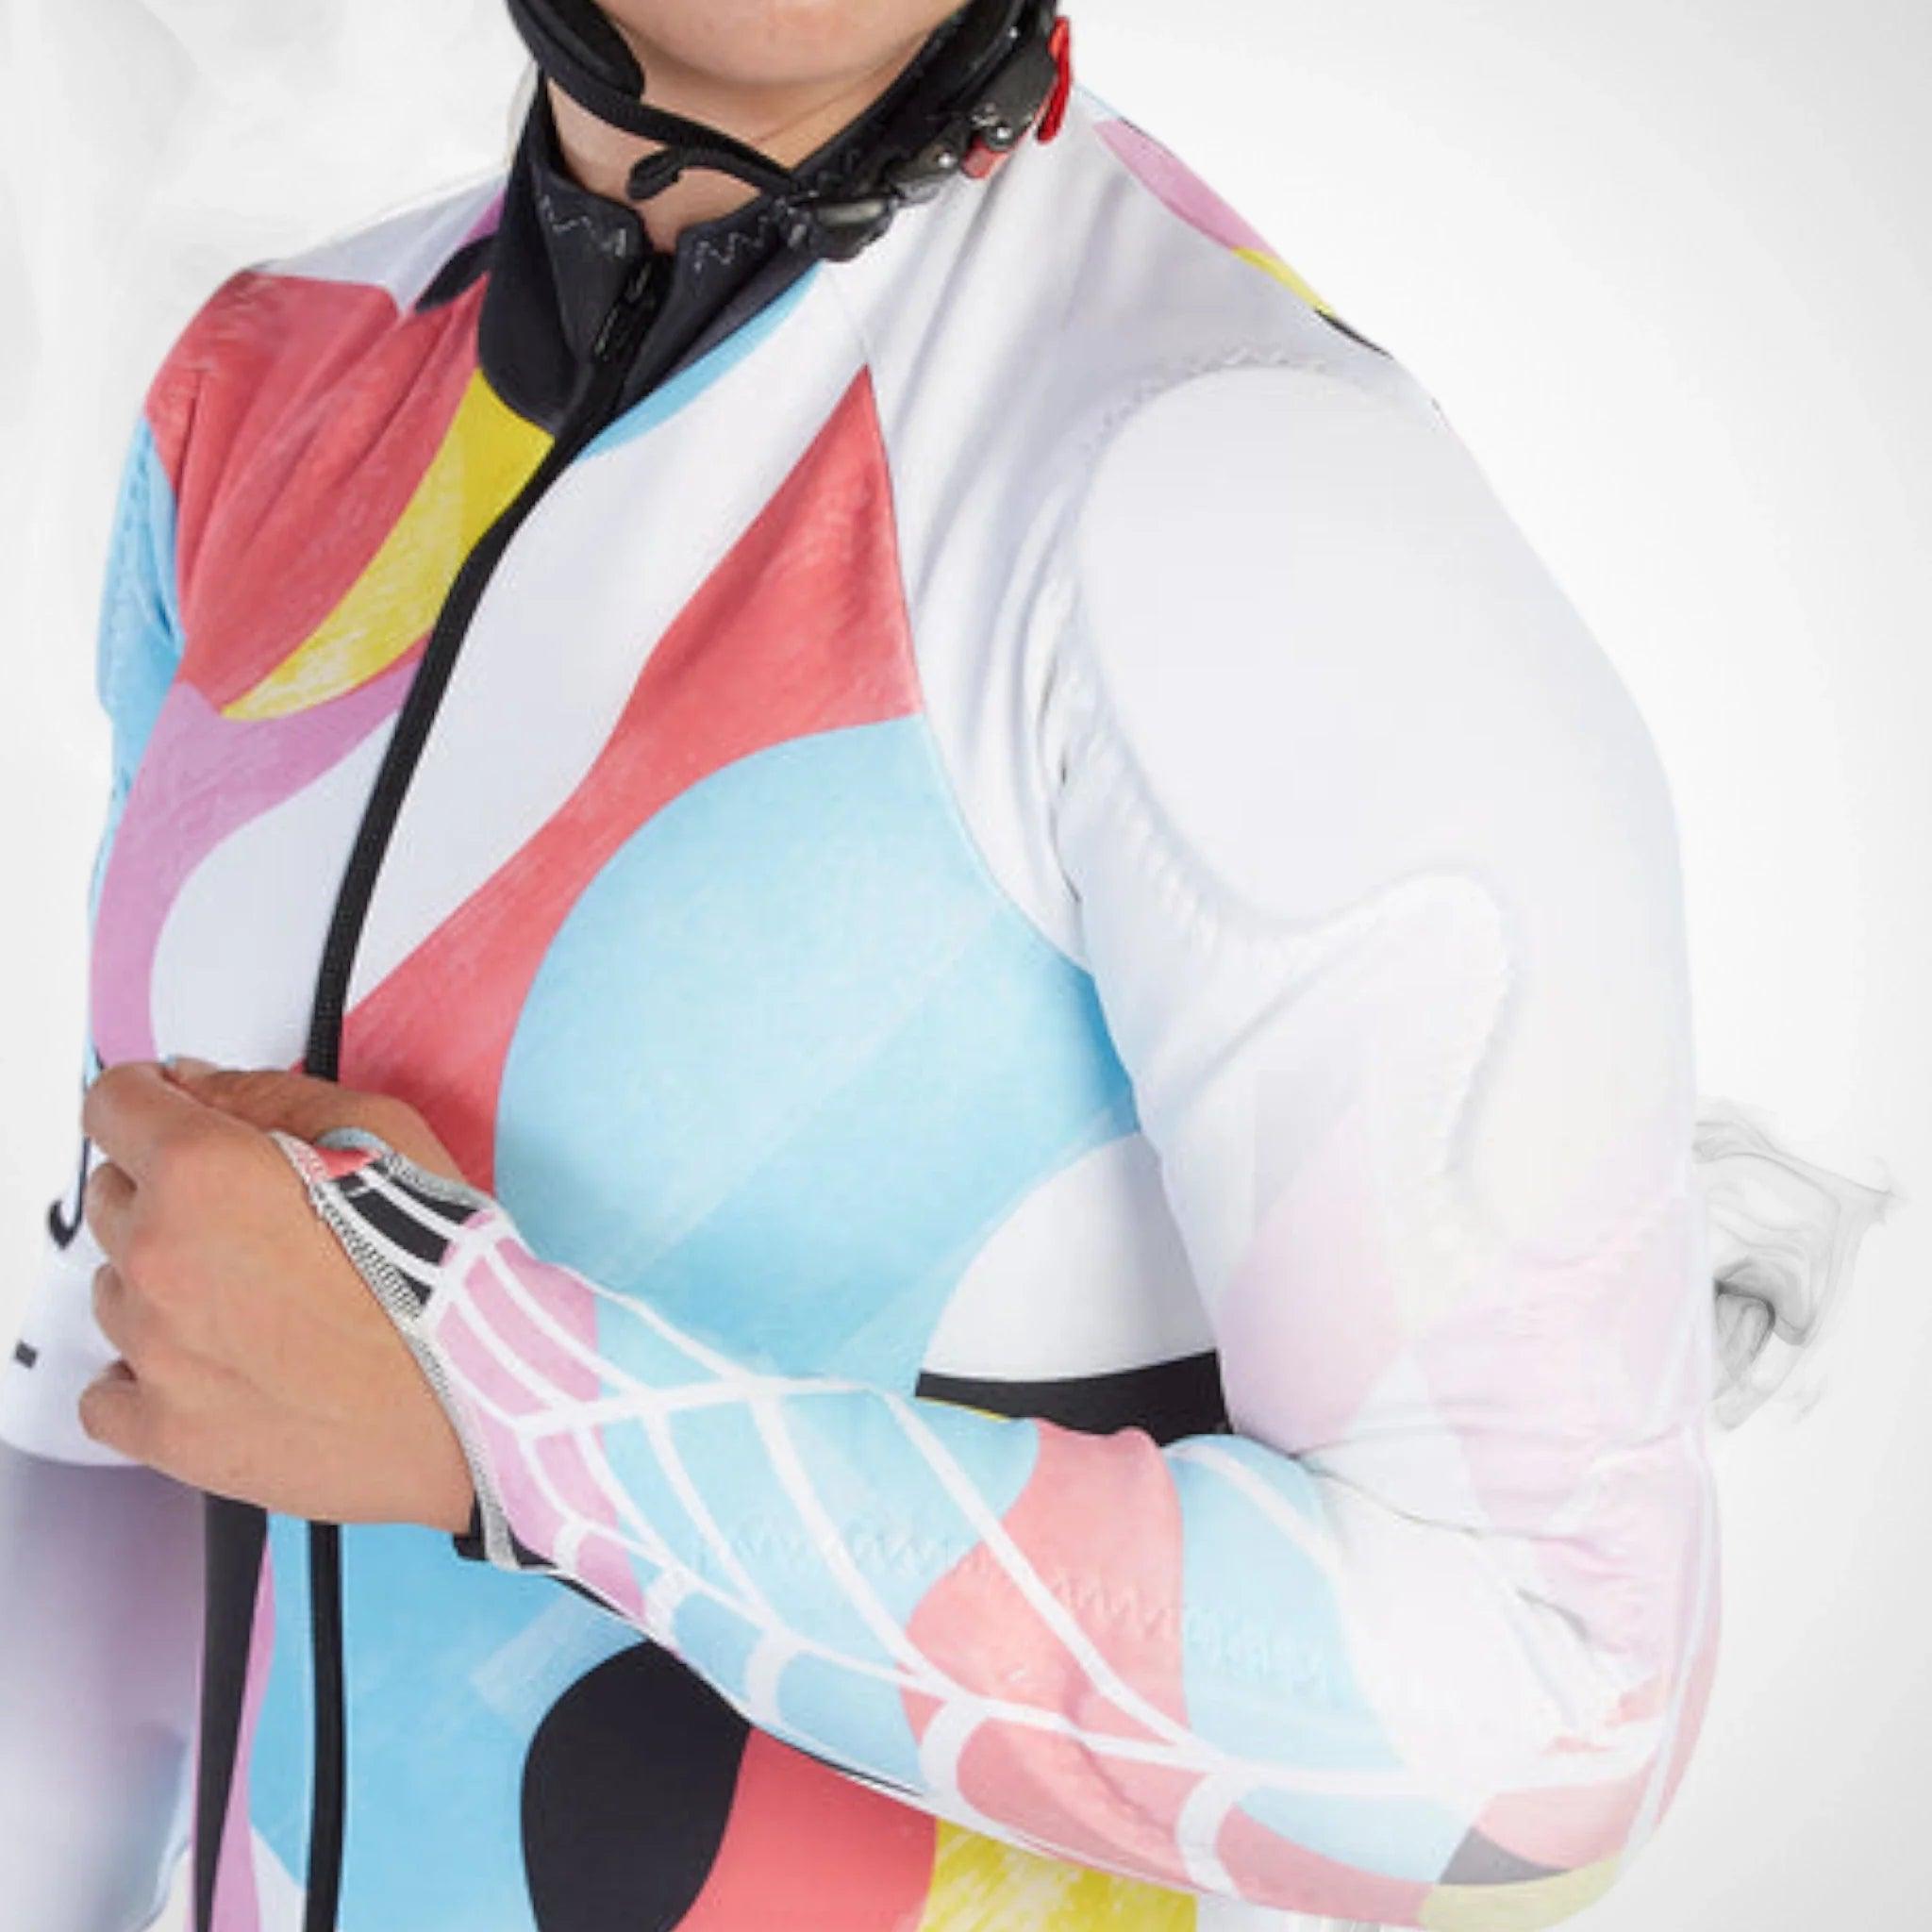 2023 Spyder Women's Performance GS Suit - Dash Racegear 